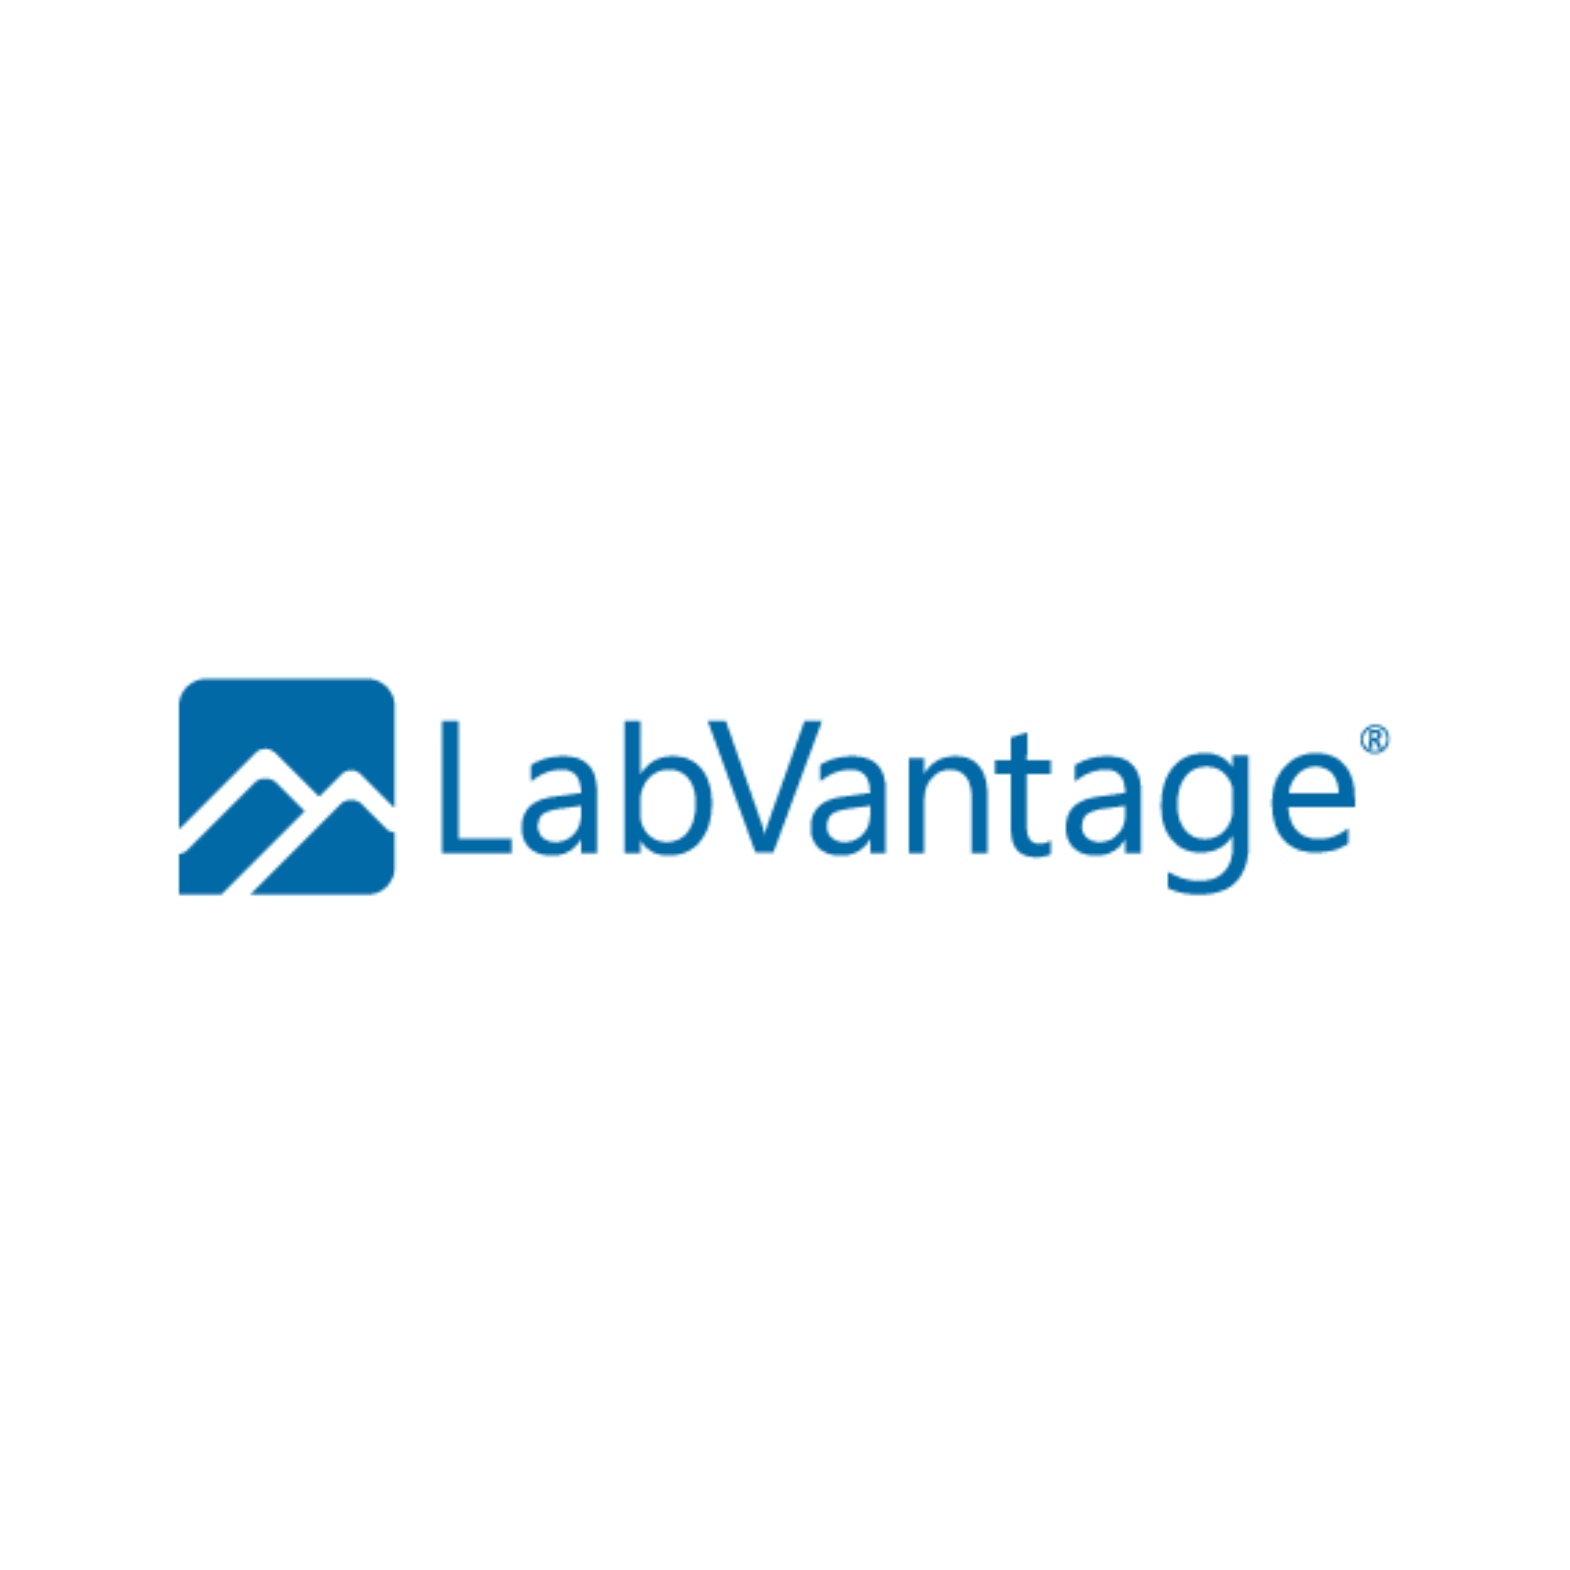 images/AFMS/Partners/LabVantage.jpg#joomlaImage://local-images/AFMS/Partners/LabVantage.jpg?width=1570&height=1570